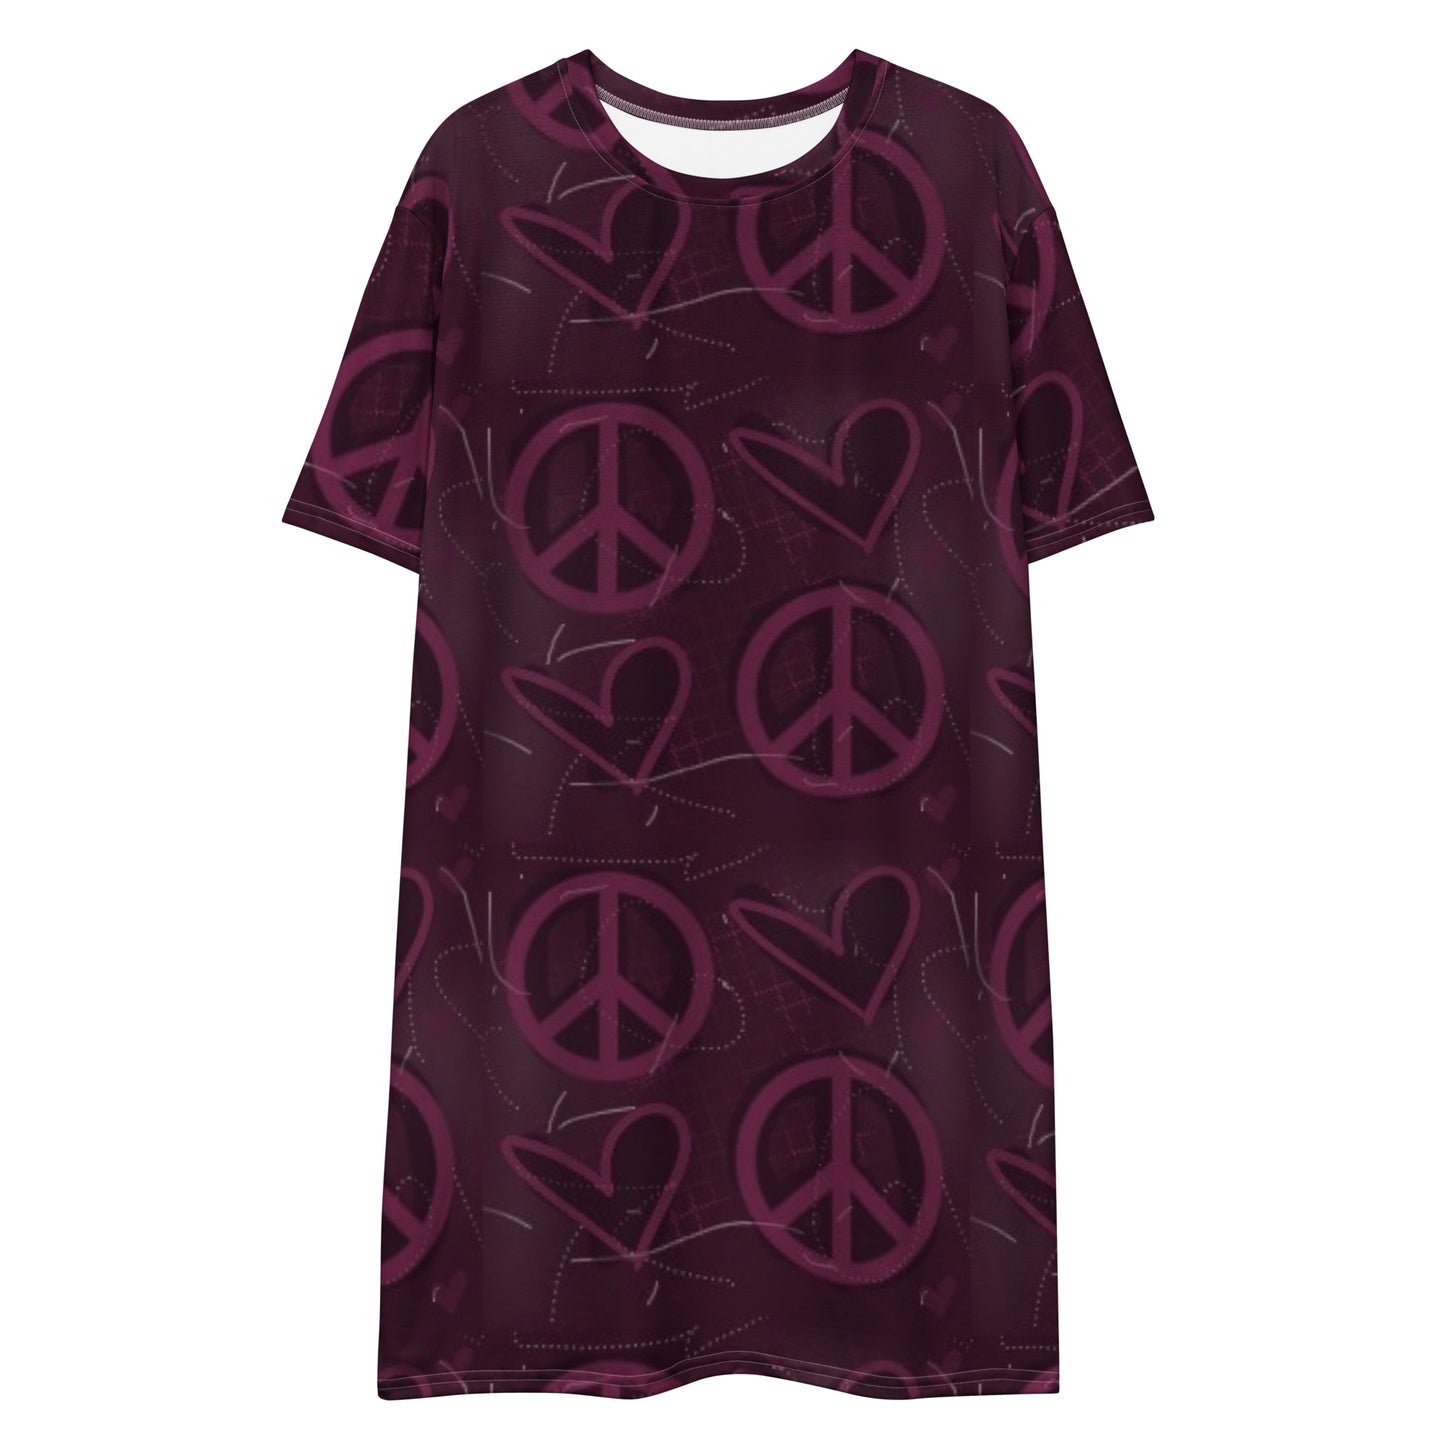 PEACE&LOVE T-shirt dress